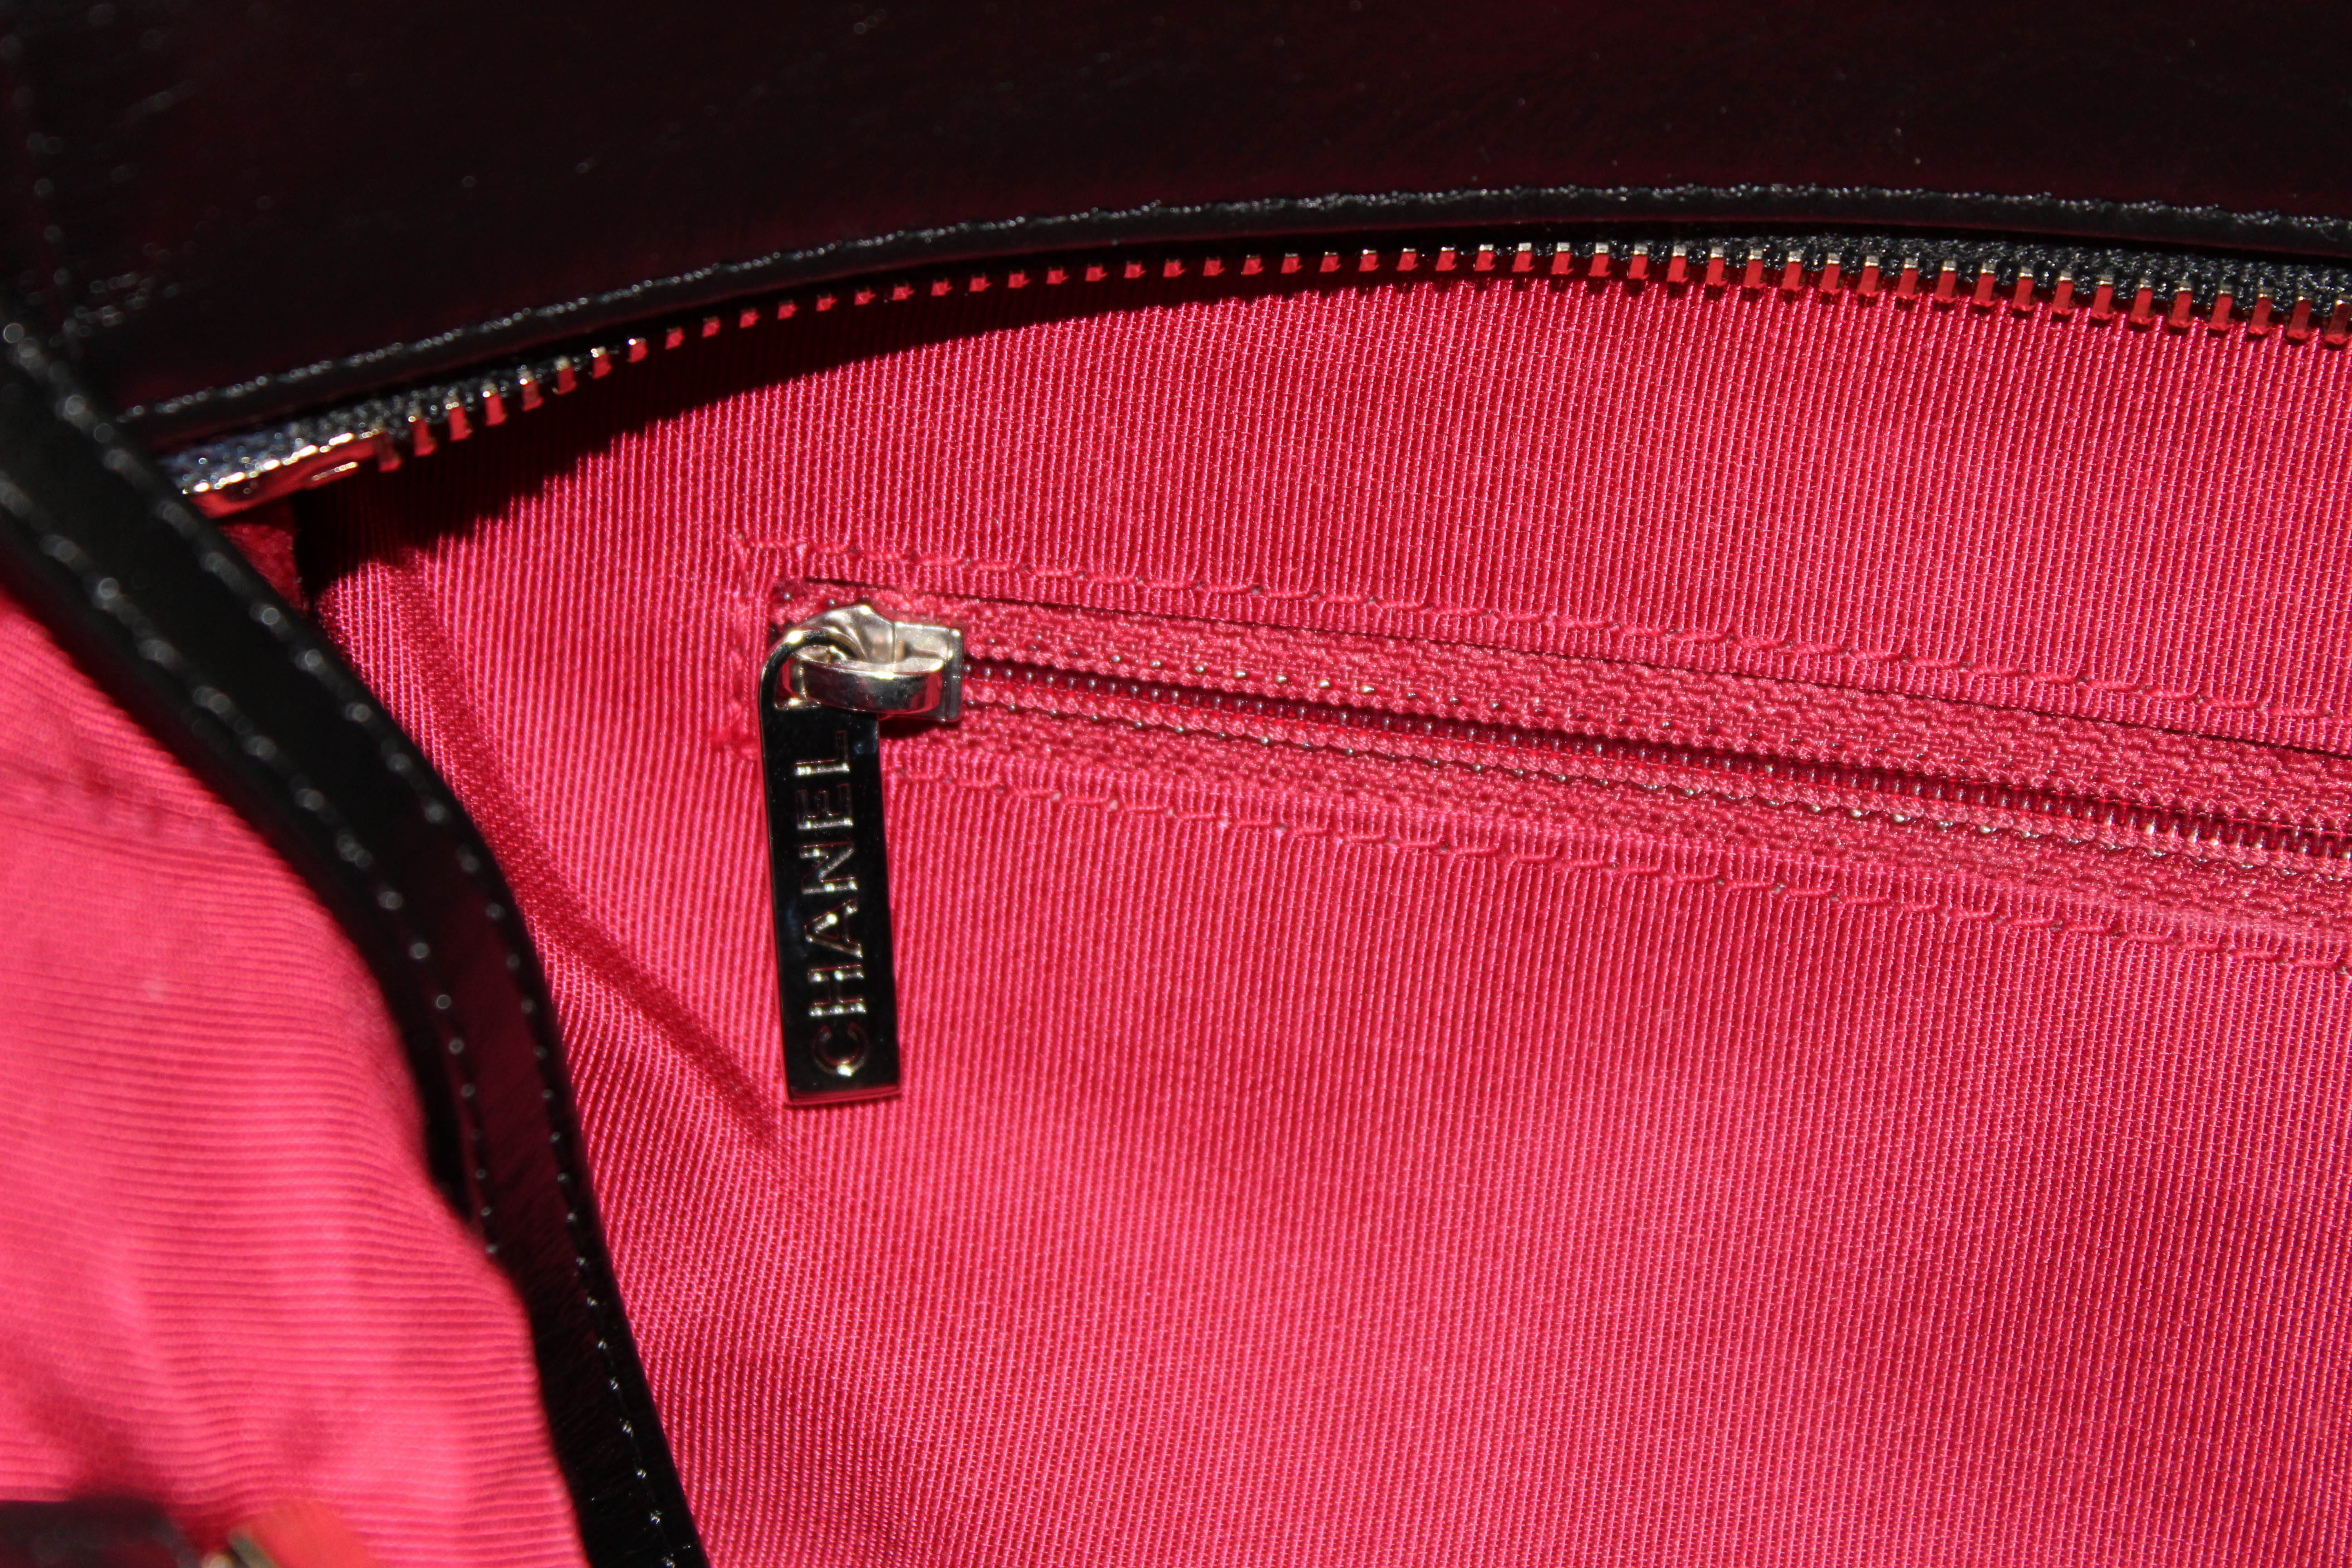 Chanel Large Gabrielle Shopping Tote - Neutrals Totes, Handbags - CHA896332